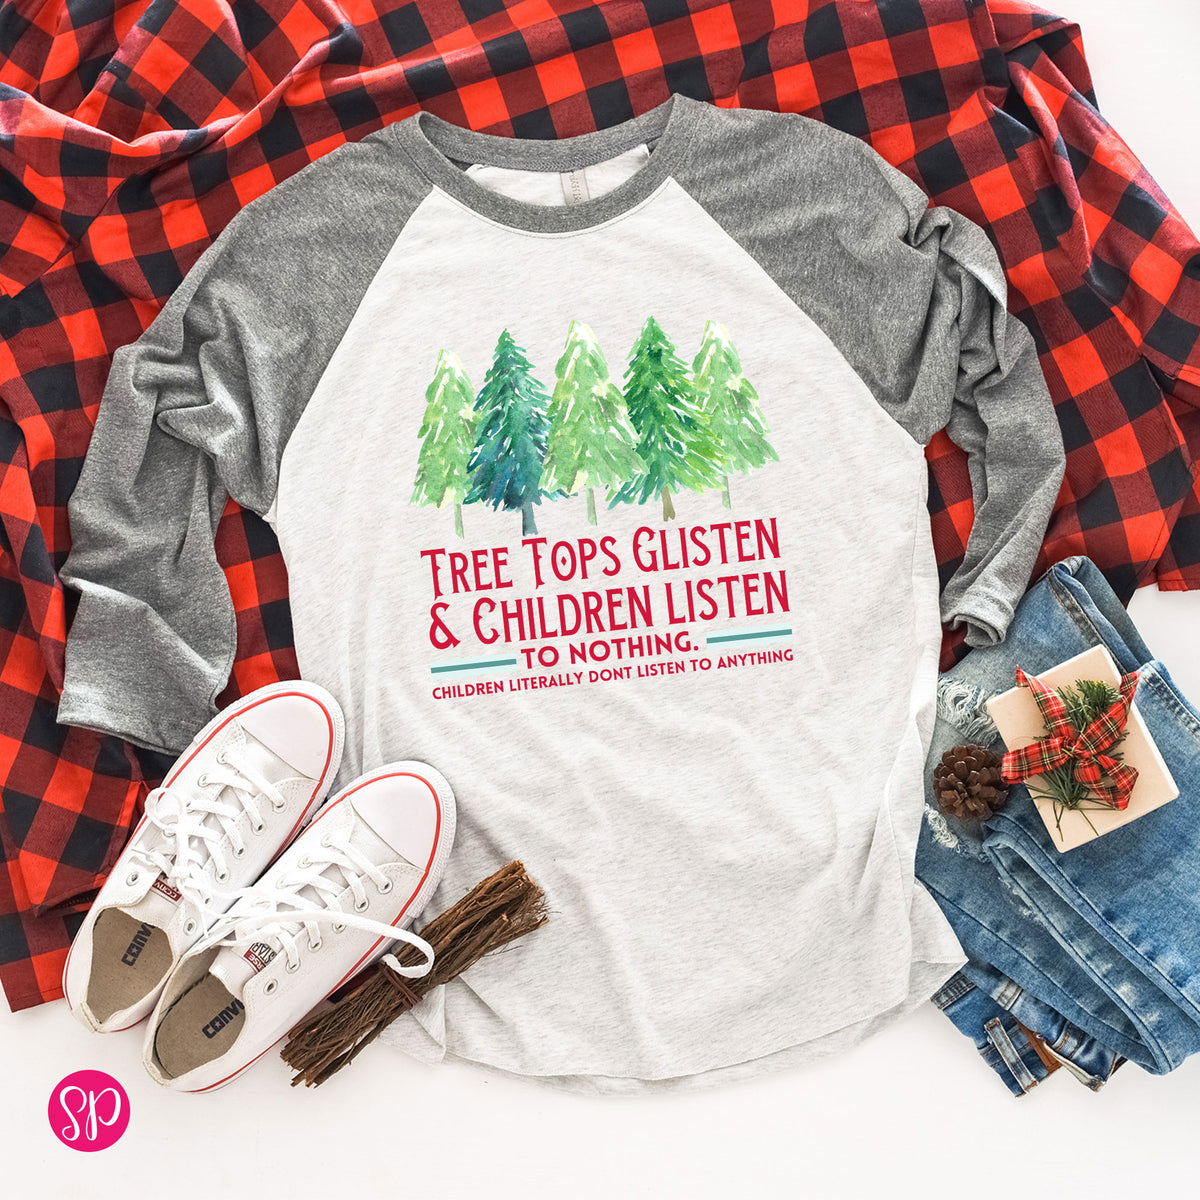 Tree Tops Glisten & Children Listen to Nothing Raglan Funny Mom Teacher Christmas Tee Shirt